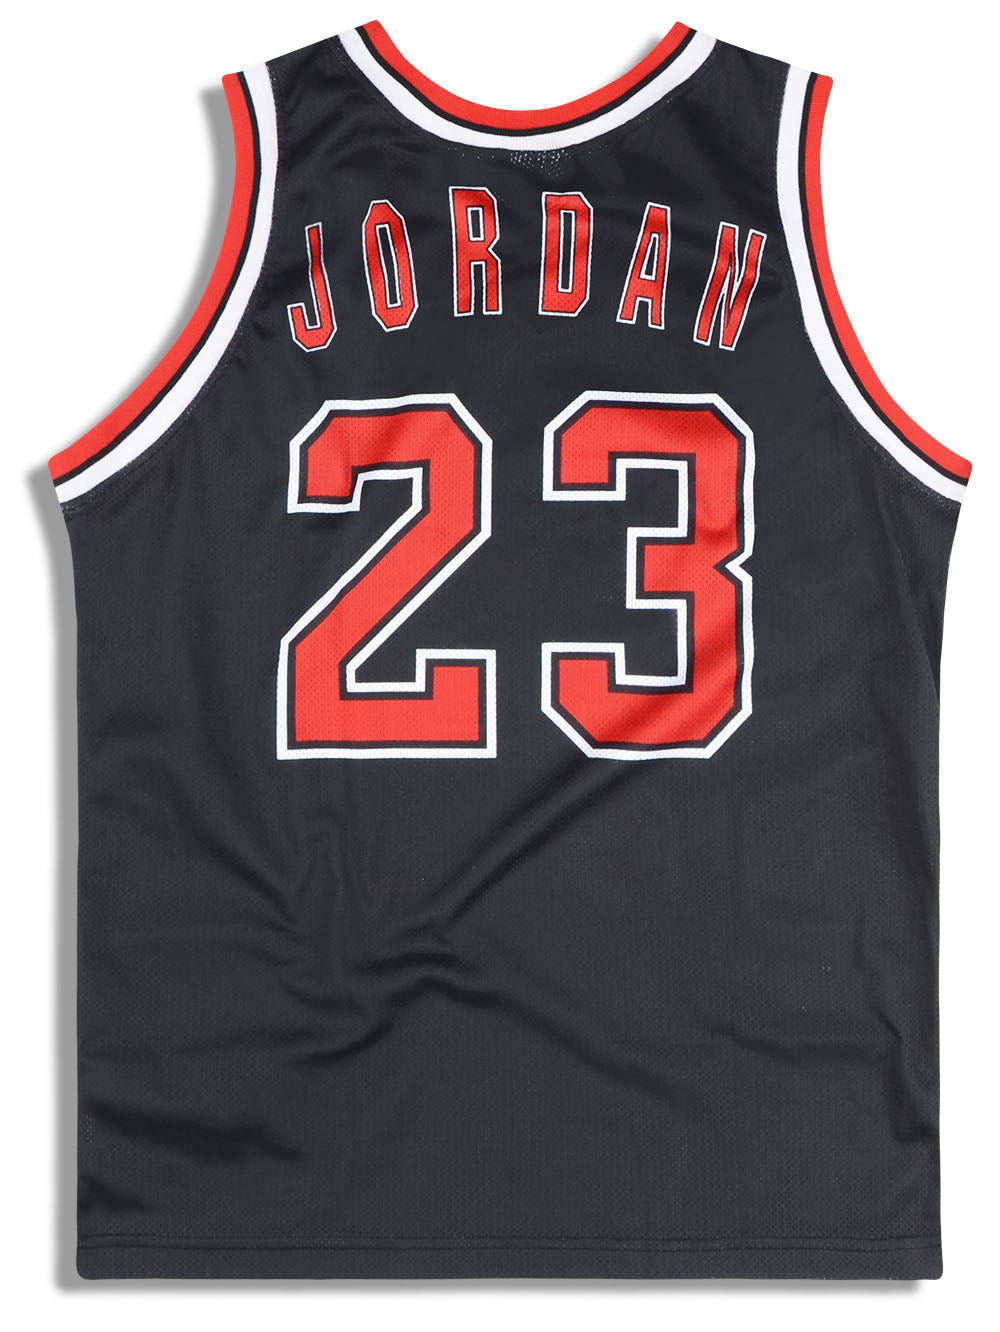 Michael Jordan Authentic Champion Jersey